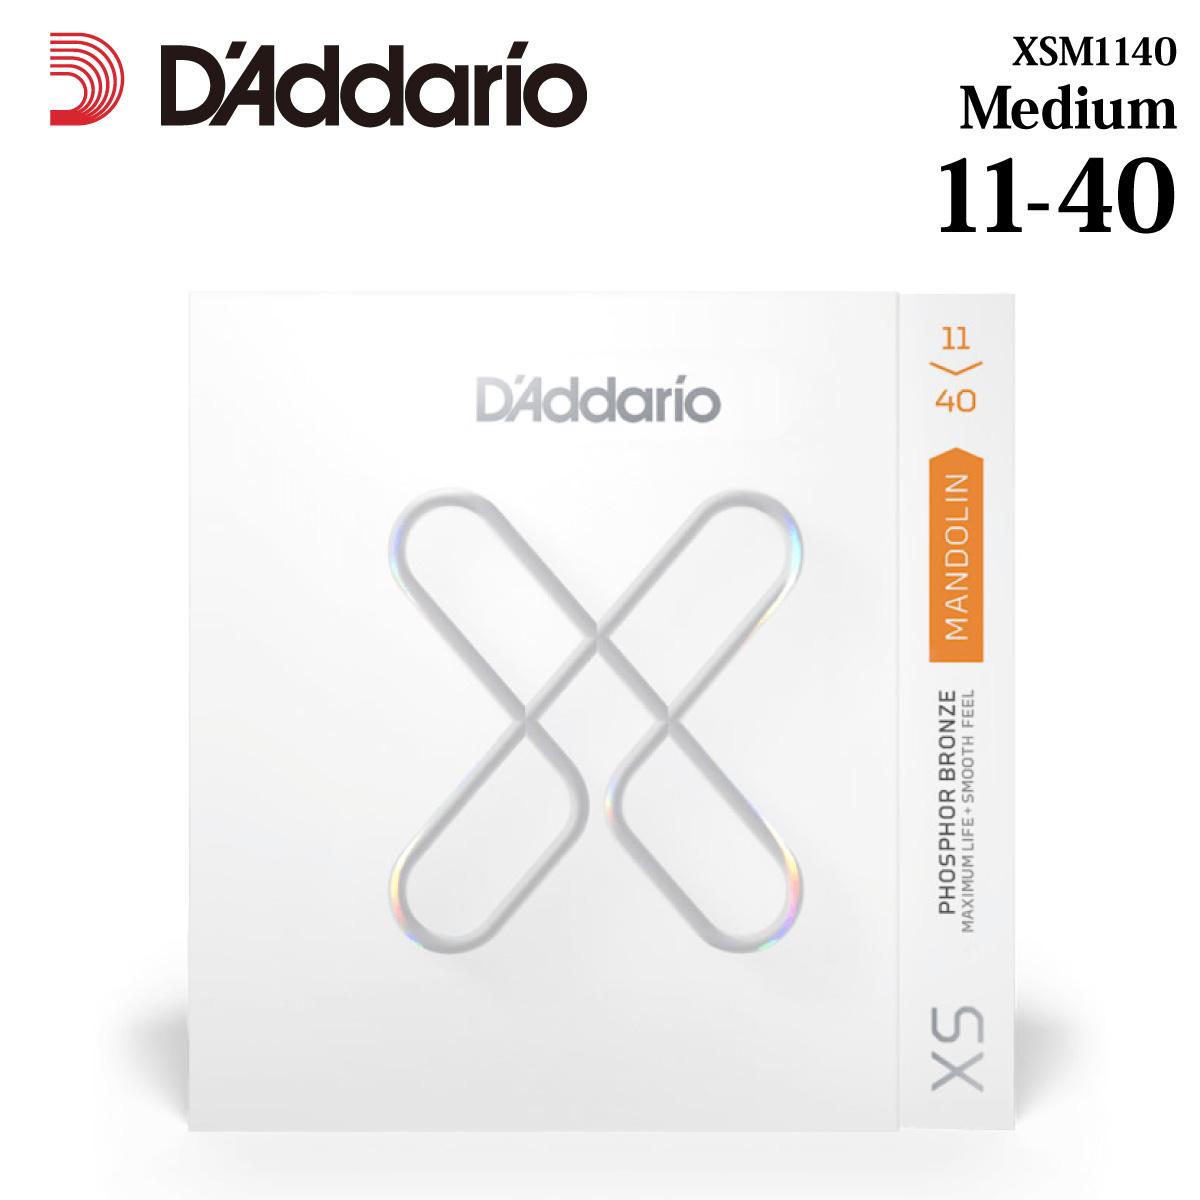 D'Addario 13-56 XS Series Mandolin Medium XSM1140 フォスファーブロンズ 超激得SALE ランキングTOP5 8弦 マンドリン ダダリオ コーティング ミディアム